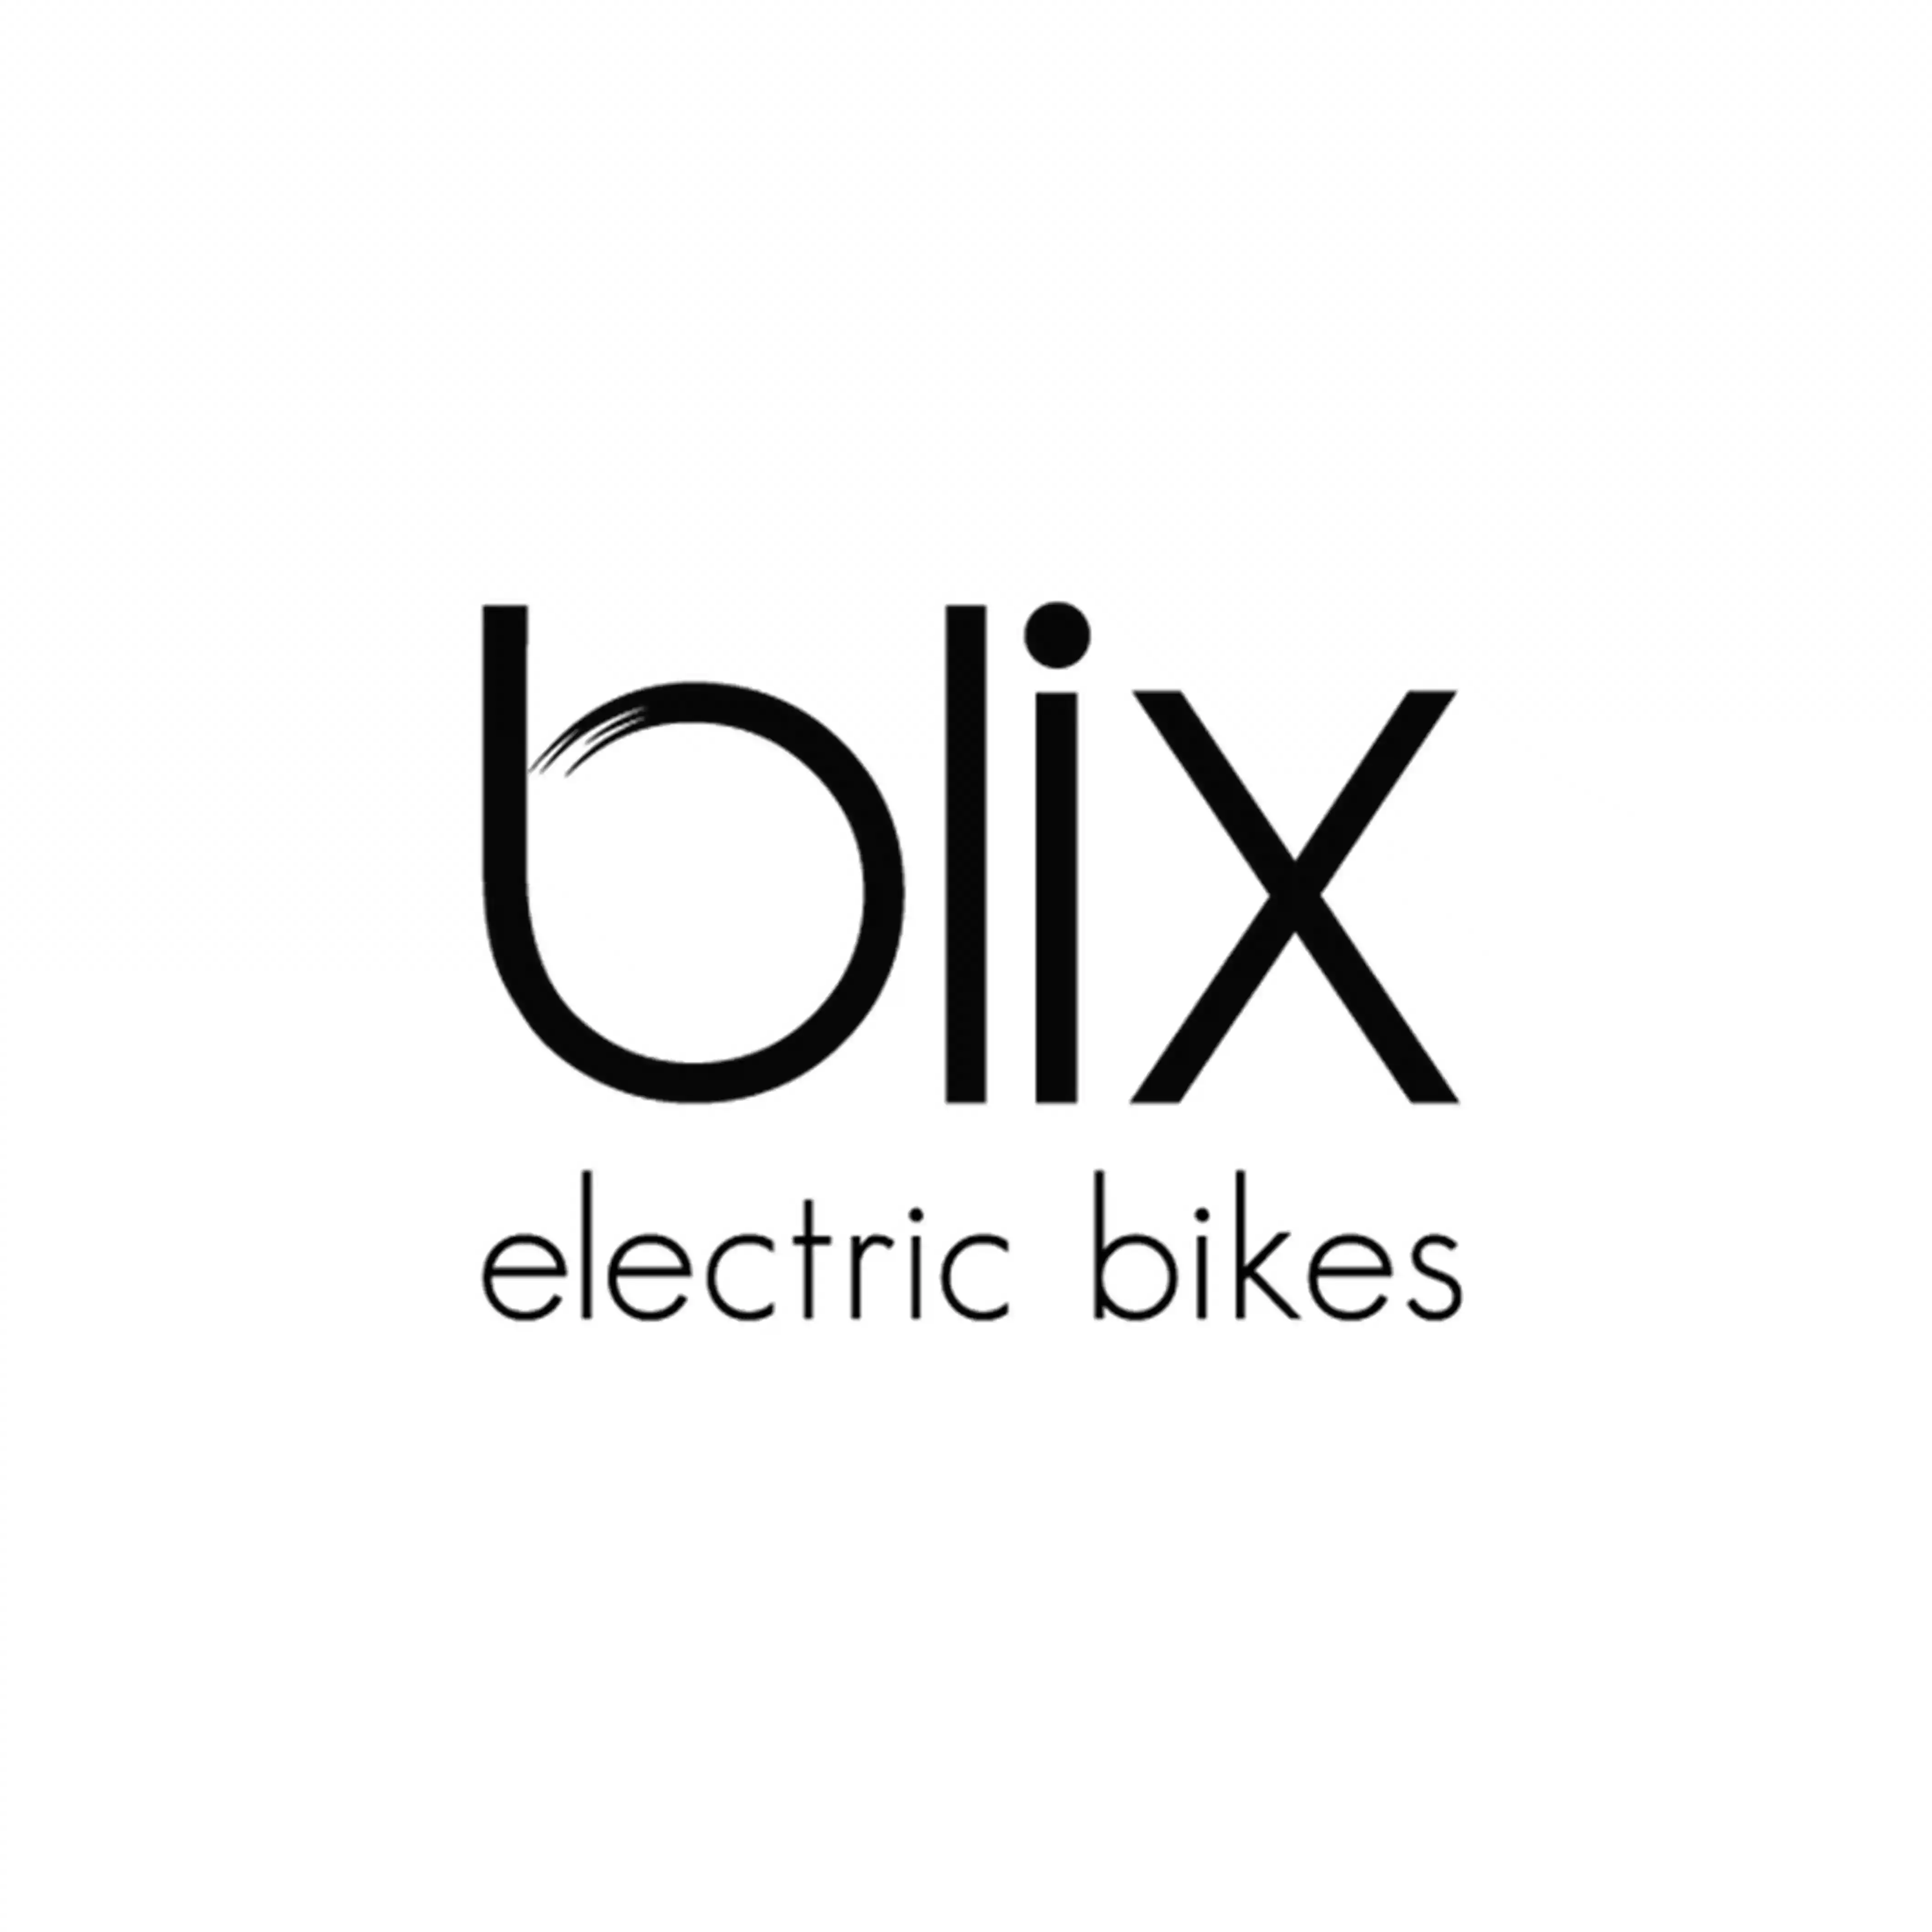 Blix Bike promo codes